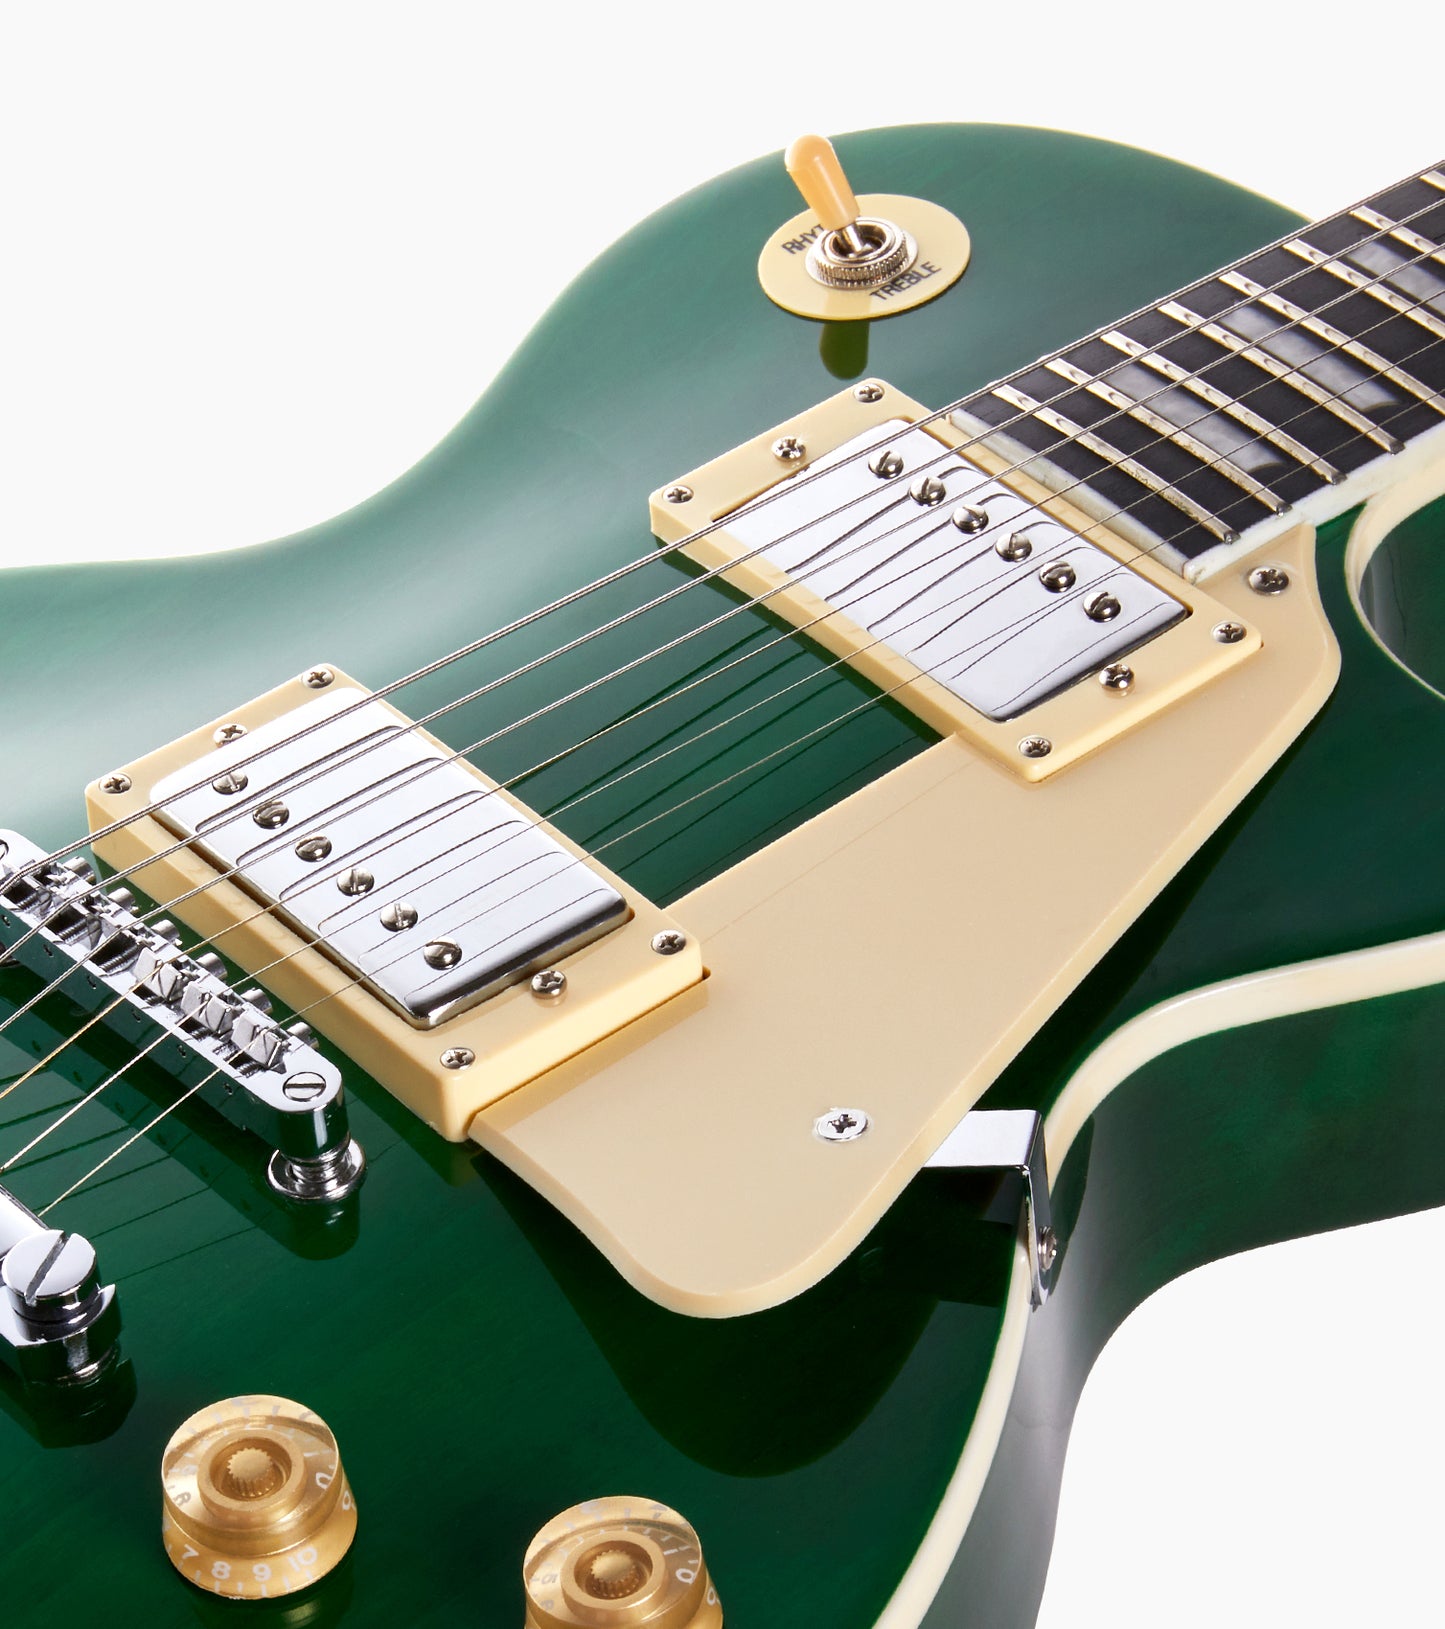 39 inch Les Paul Electric Guitar in Green - Pickups